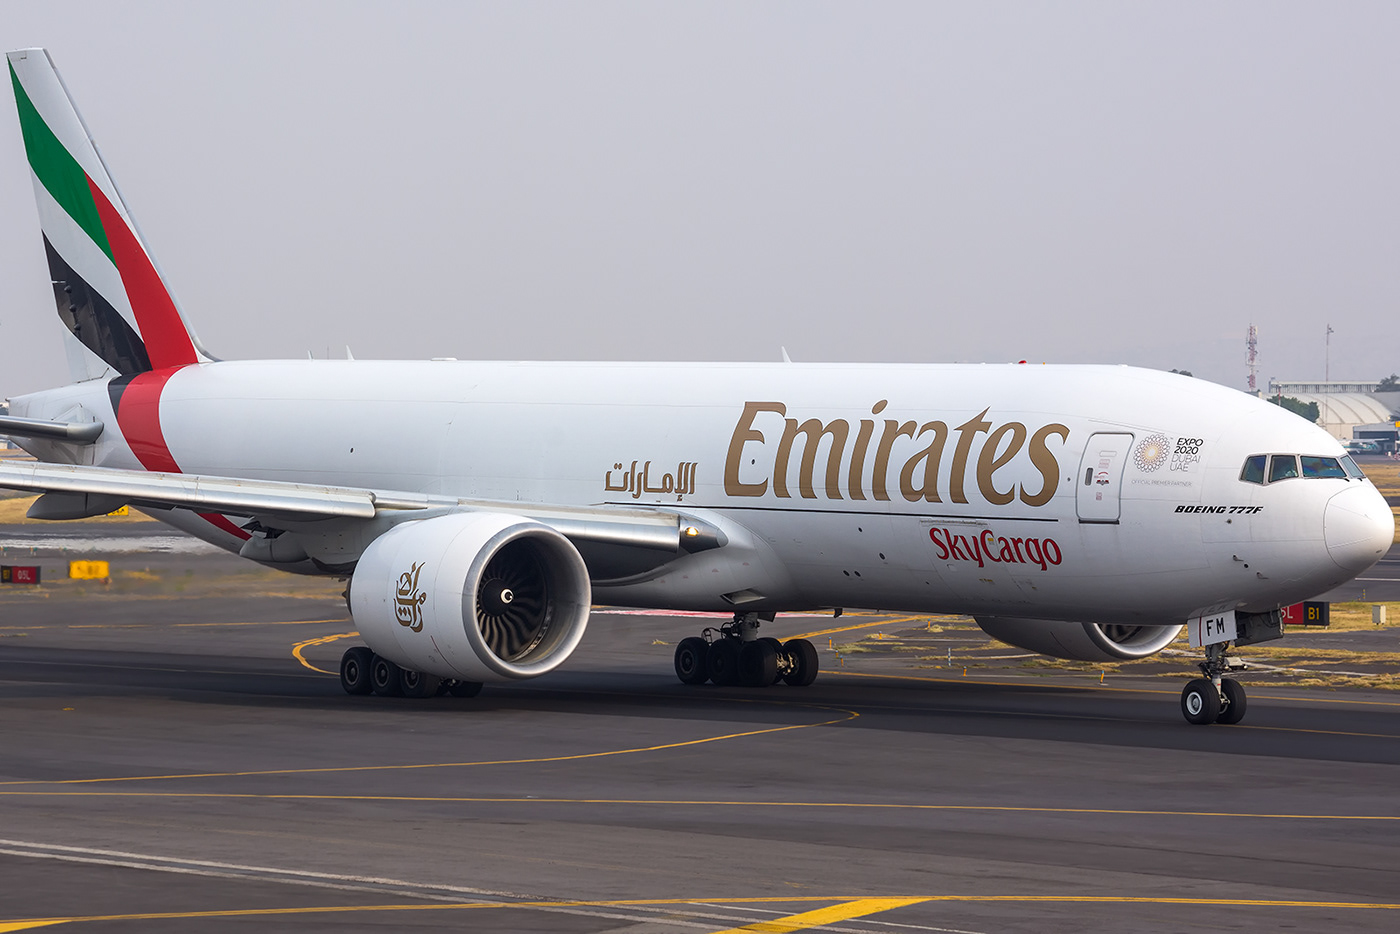 aerolinea aeronave aviacion avion Boeing emirates emirates sky cargo mexico transporte